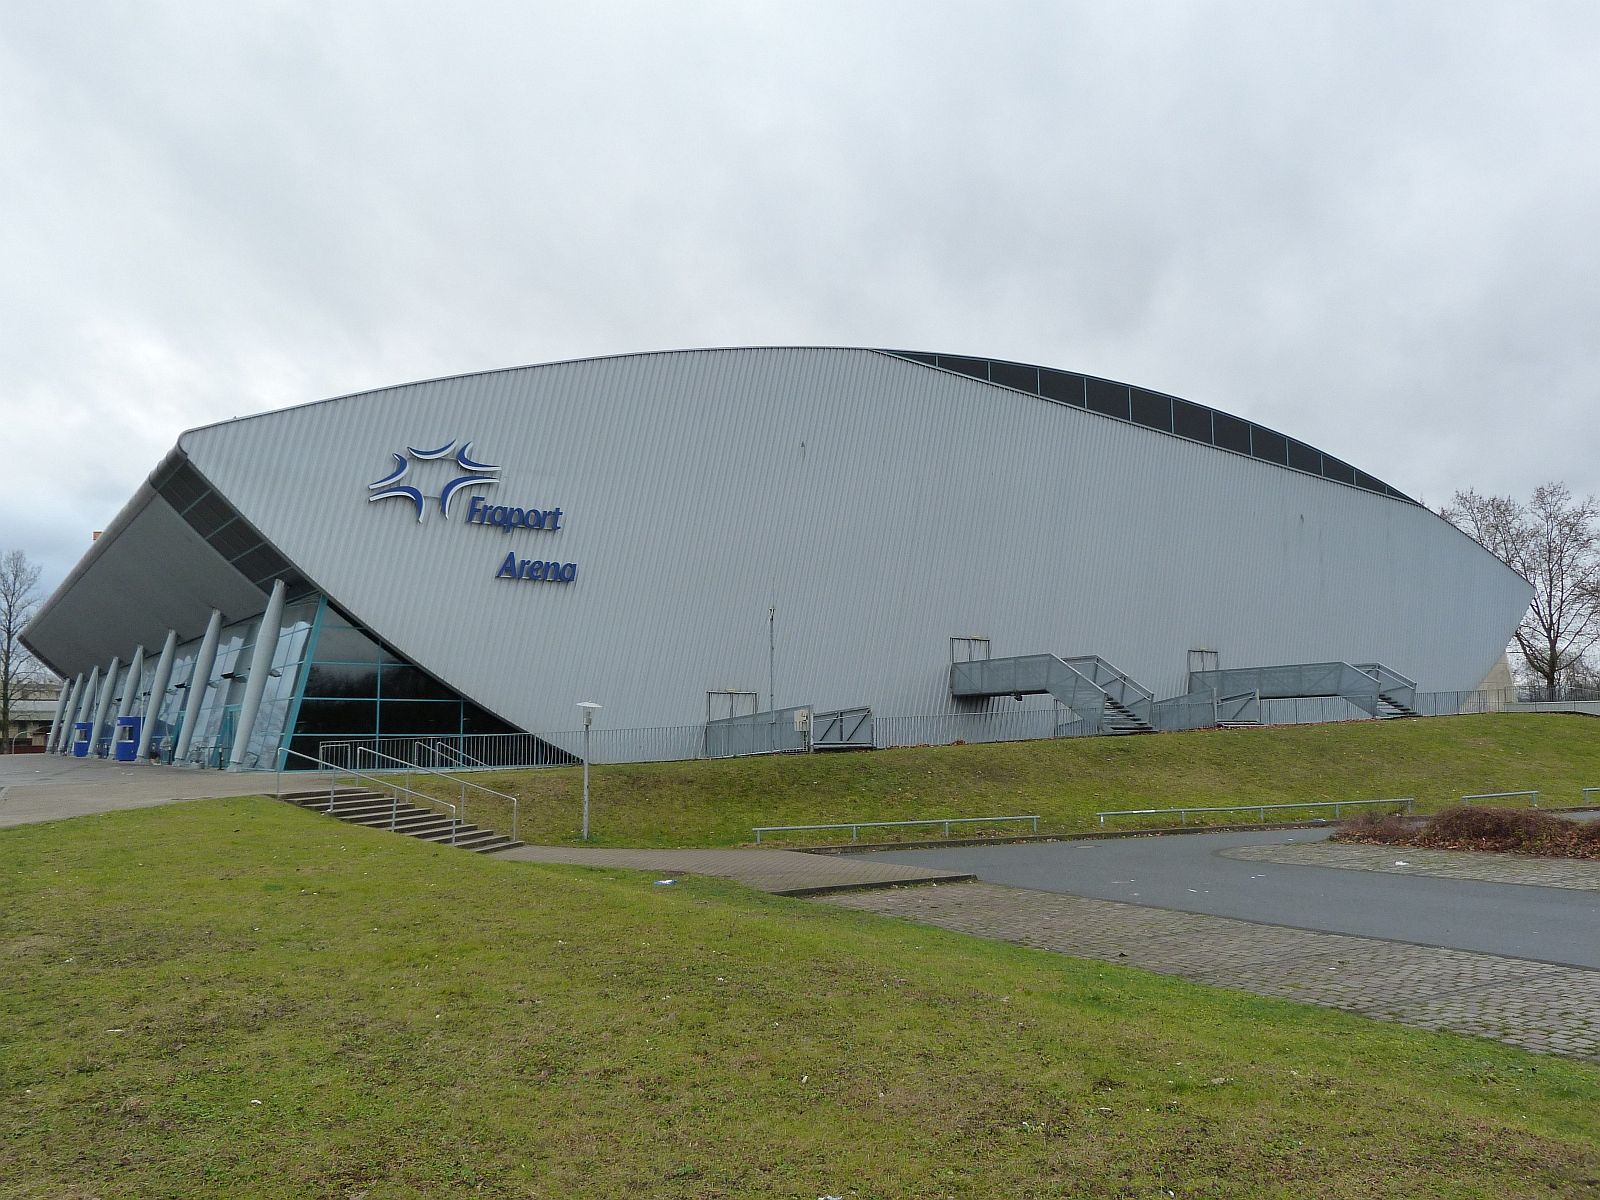 Fraport Arena de Fráncfort